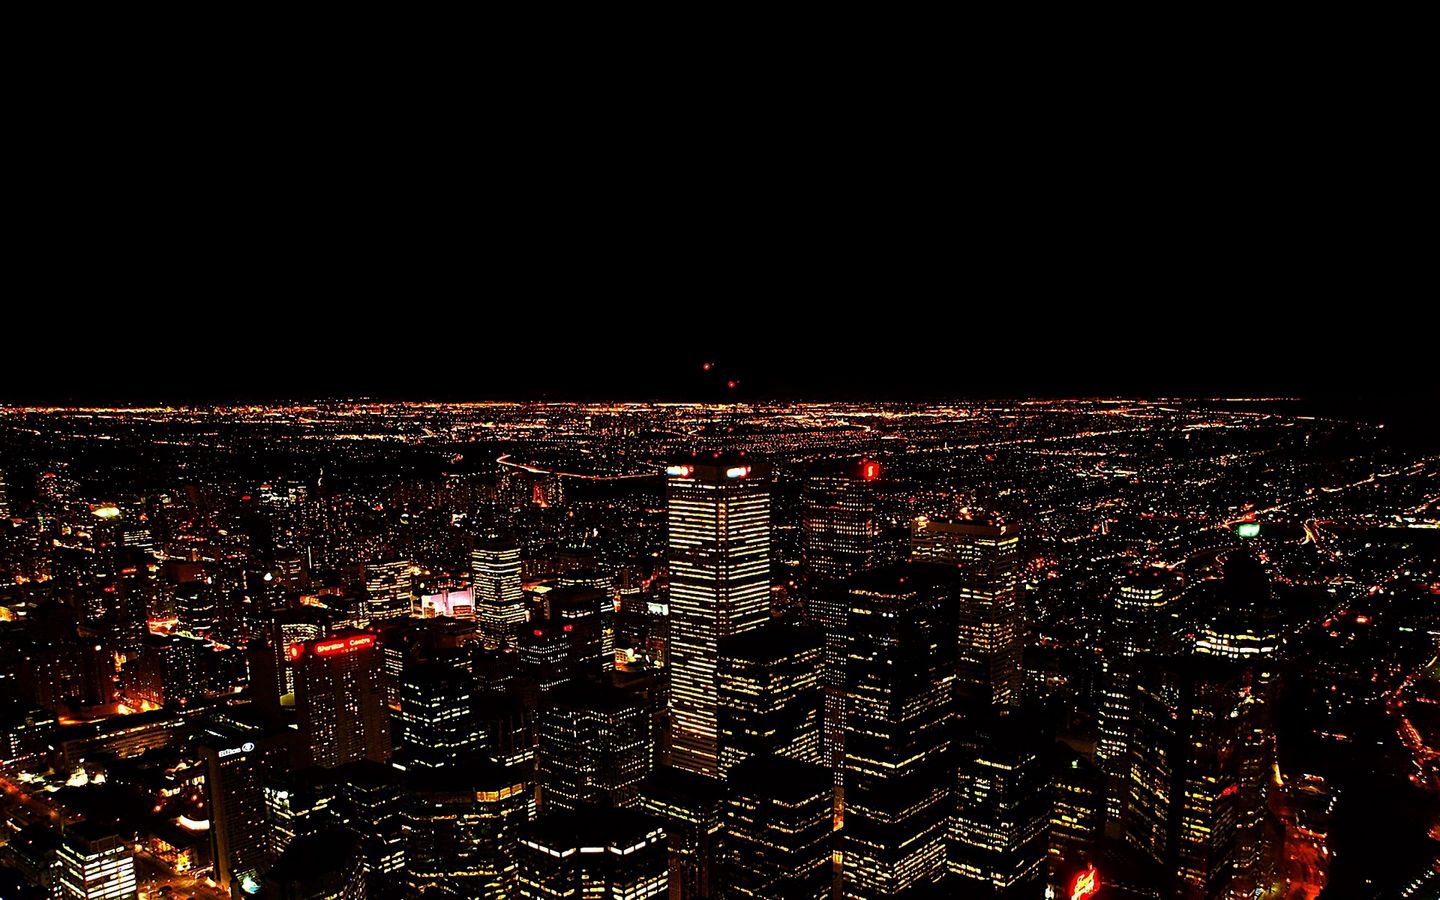 Download wallpaper x city night light top view widescreen hd background